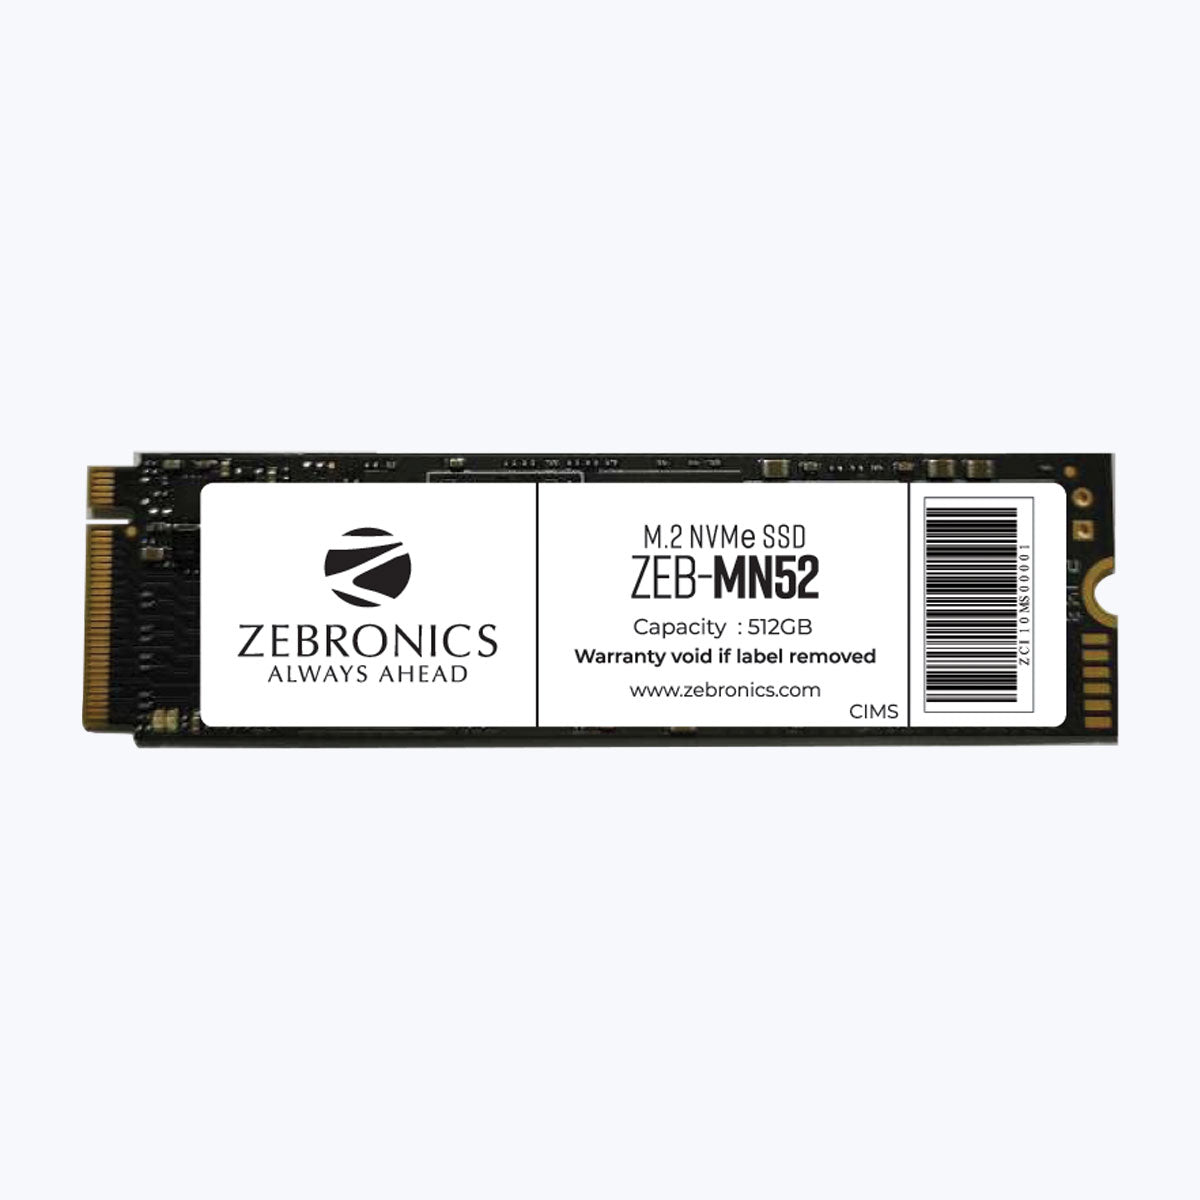 ZEB-MN52 - SSD - Zebronics